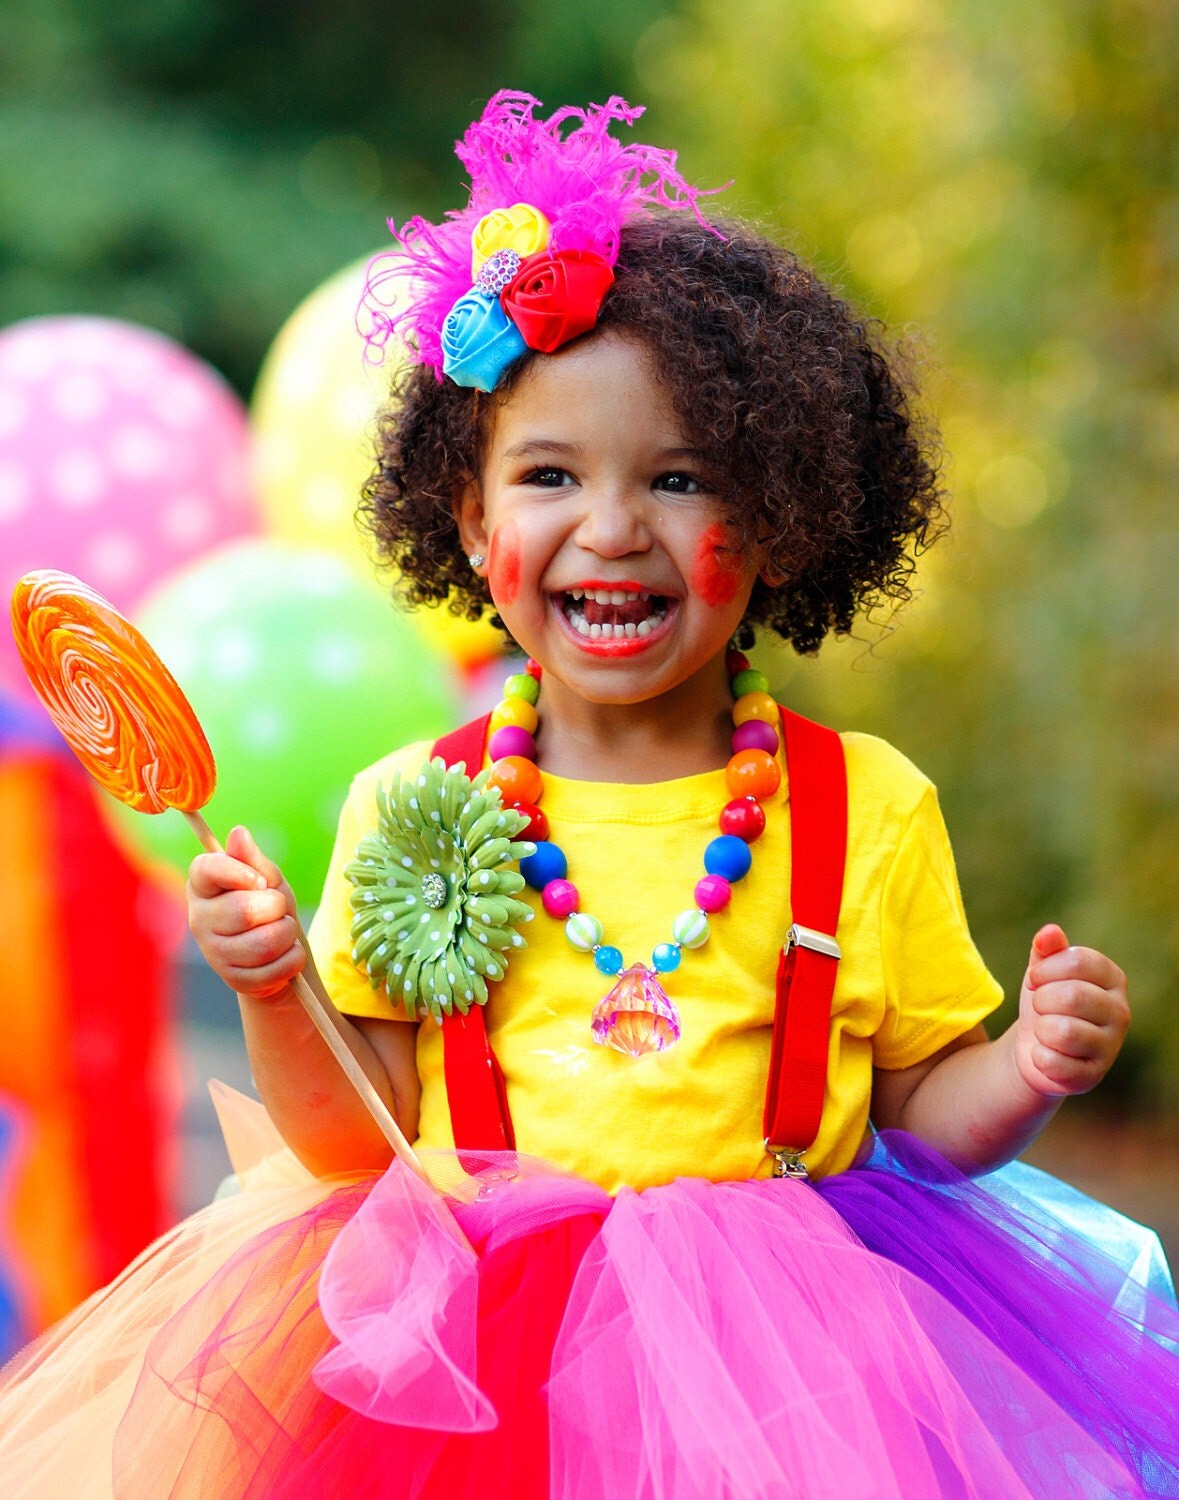 Clown tutu costume 6 pieces toddler baby girls by cutiepiegoodies